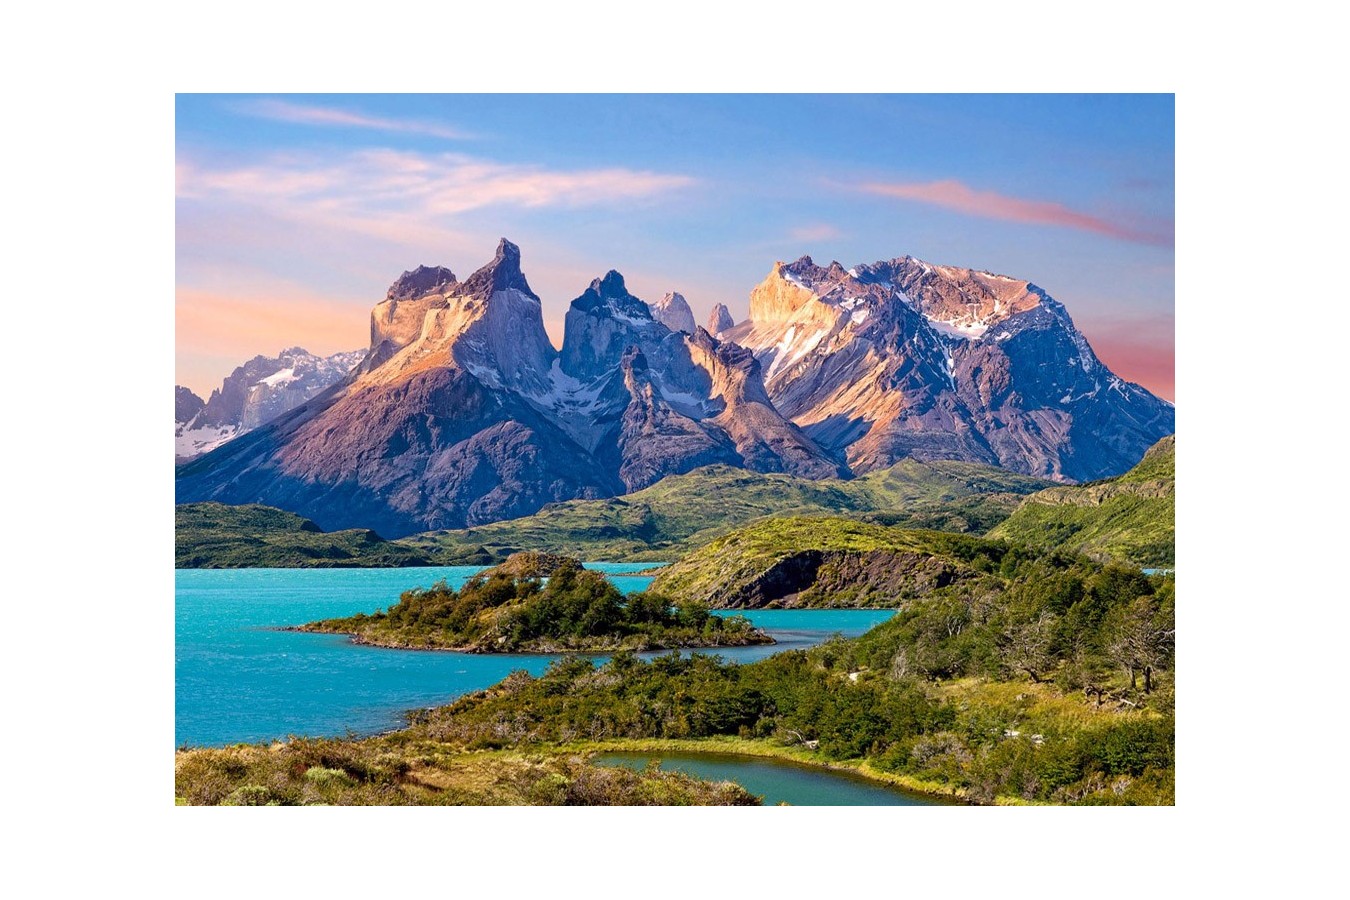 Puzzle Castorland - Torres del Paine, Patagonia, Chile, 1500 piese